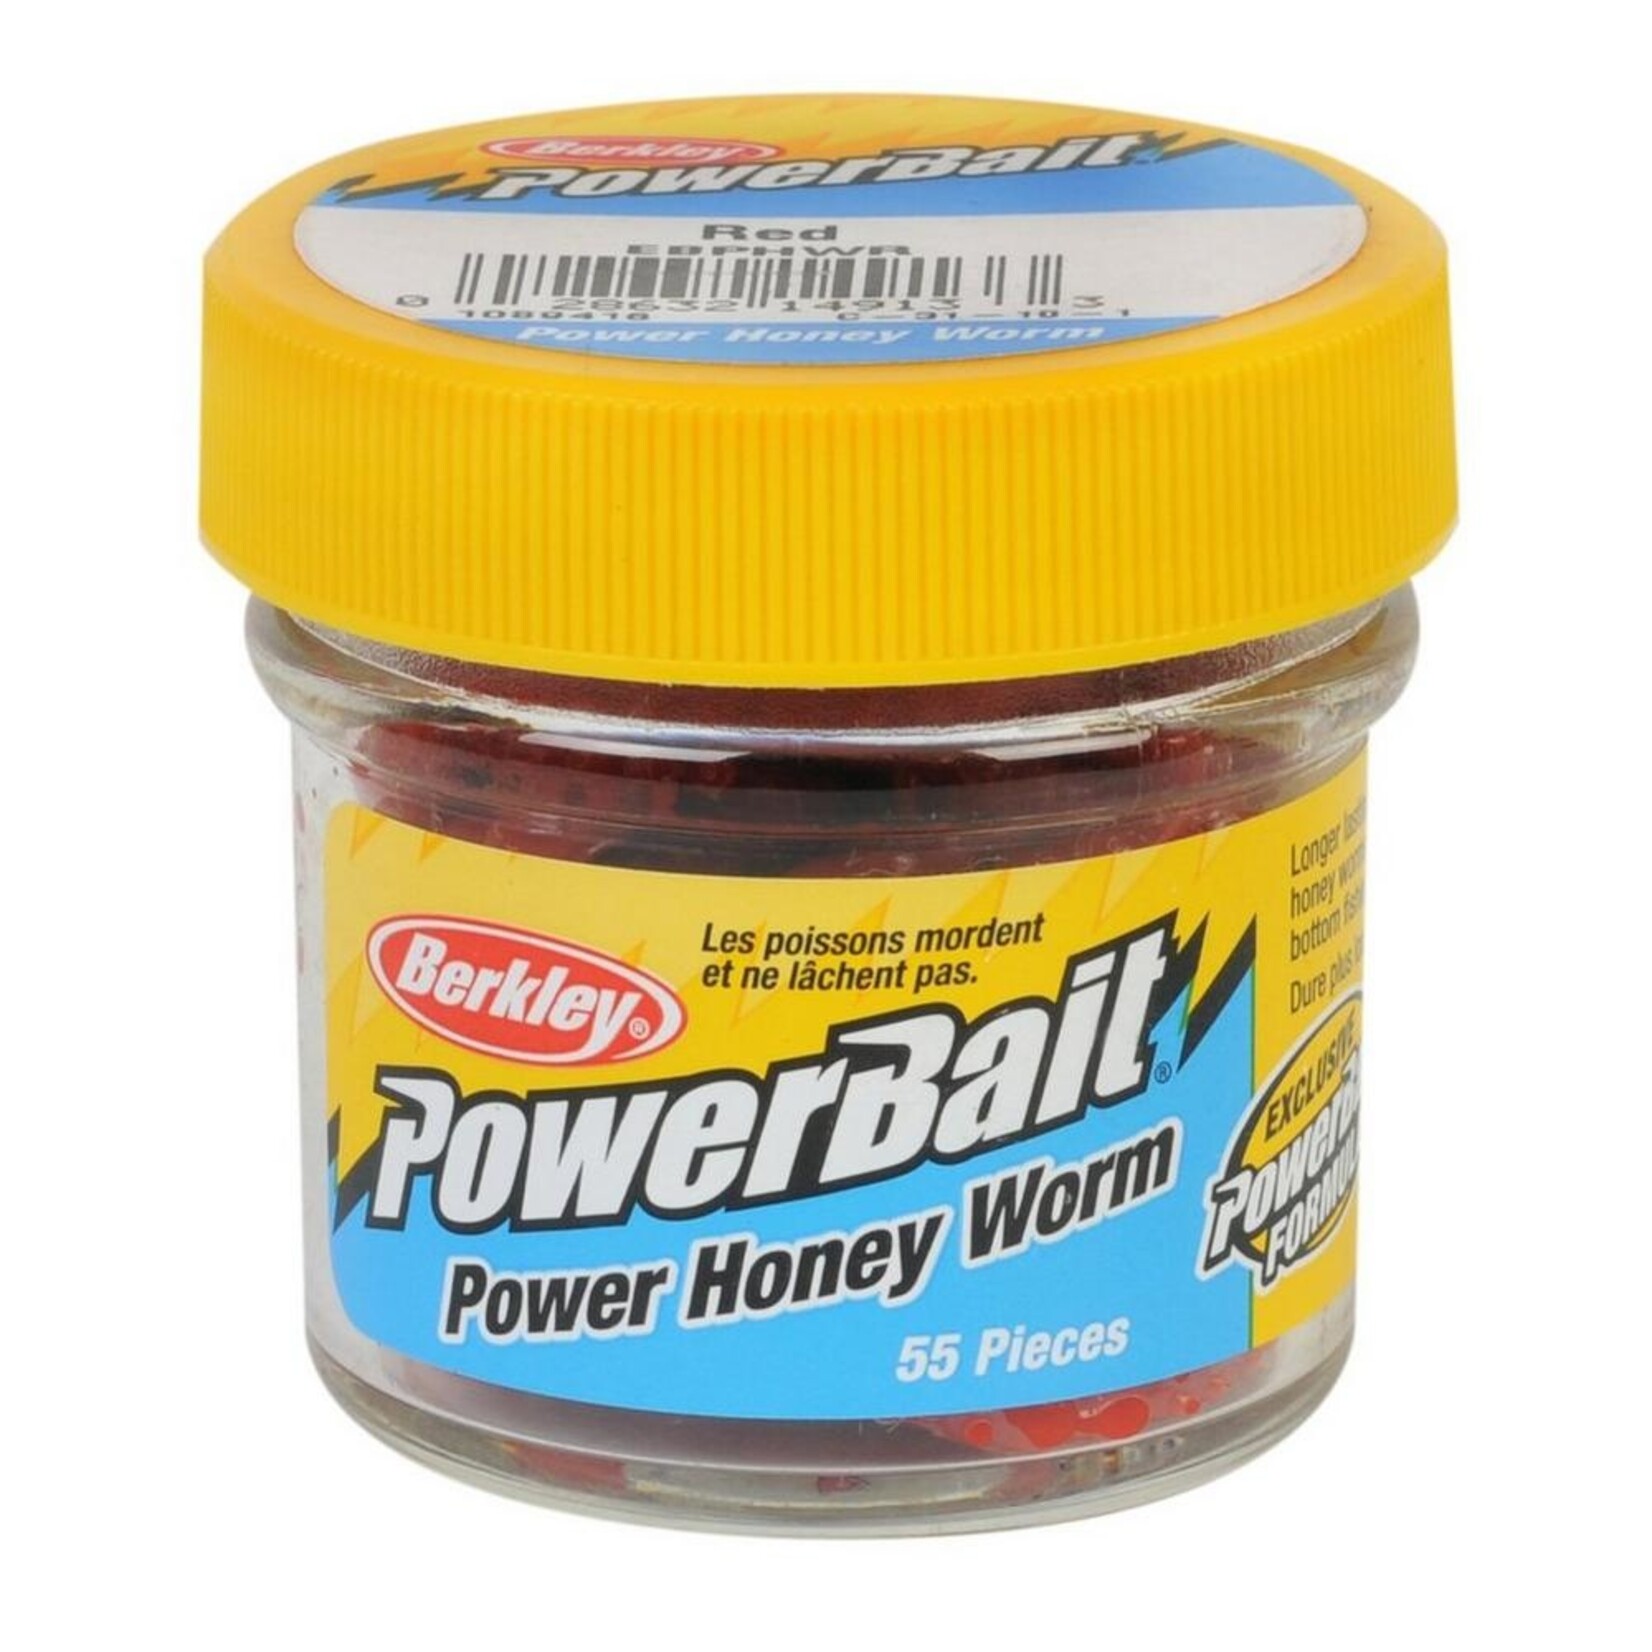 PowerBait Honey Worms - Poor Richards